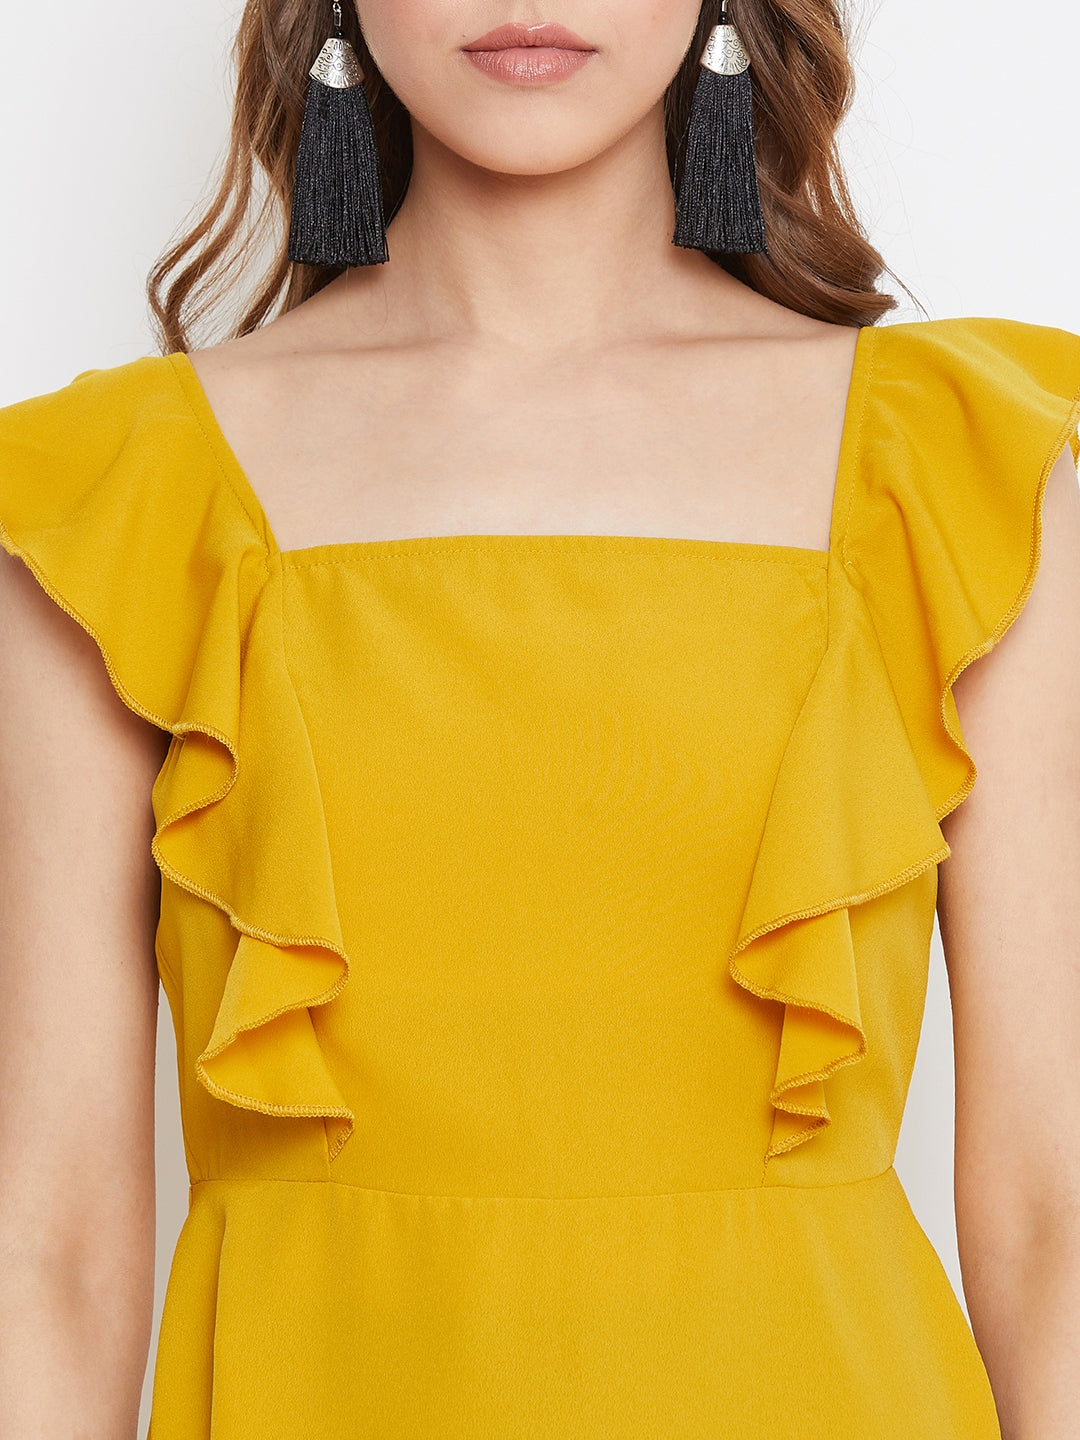 Berrylush Women Solid Mustard Yellow Sleeveless Ruffled Fit & Flare Mini Dress